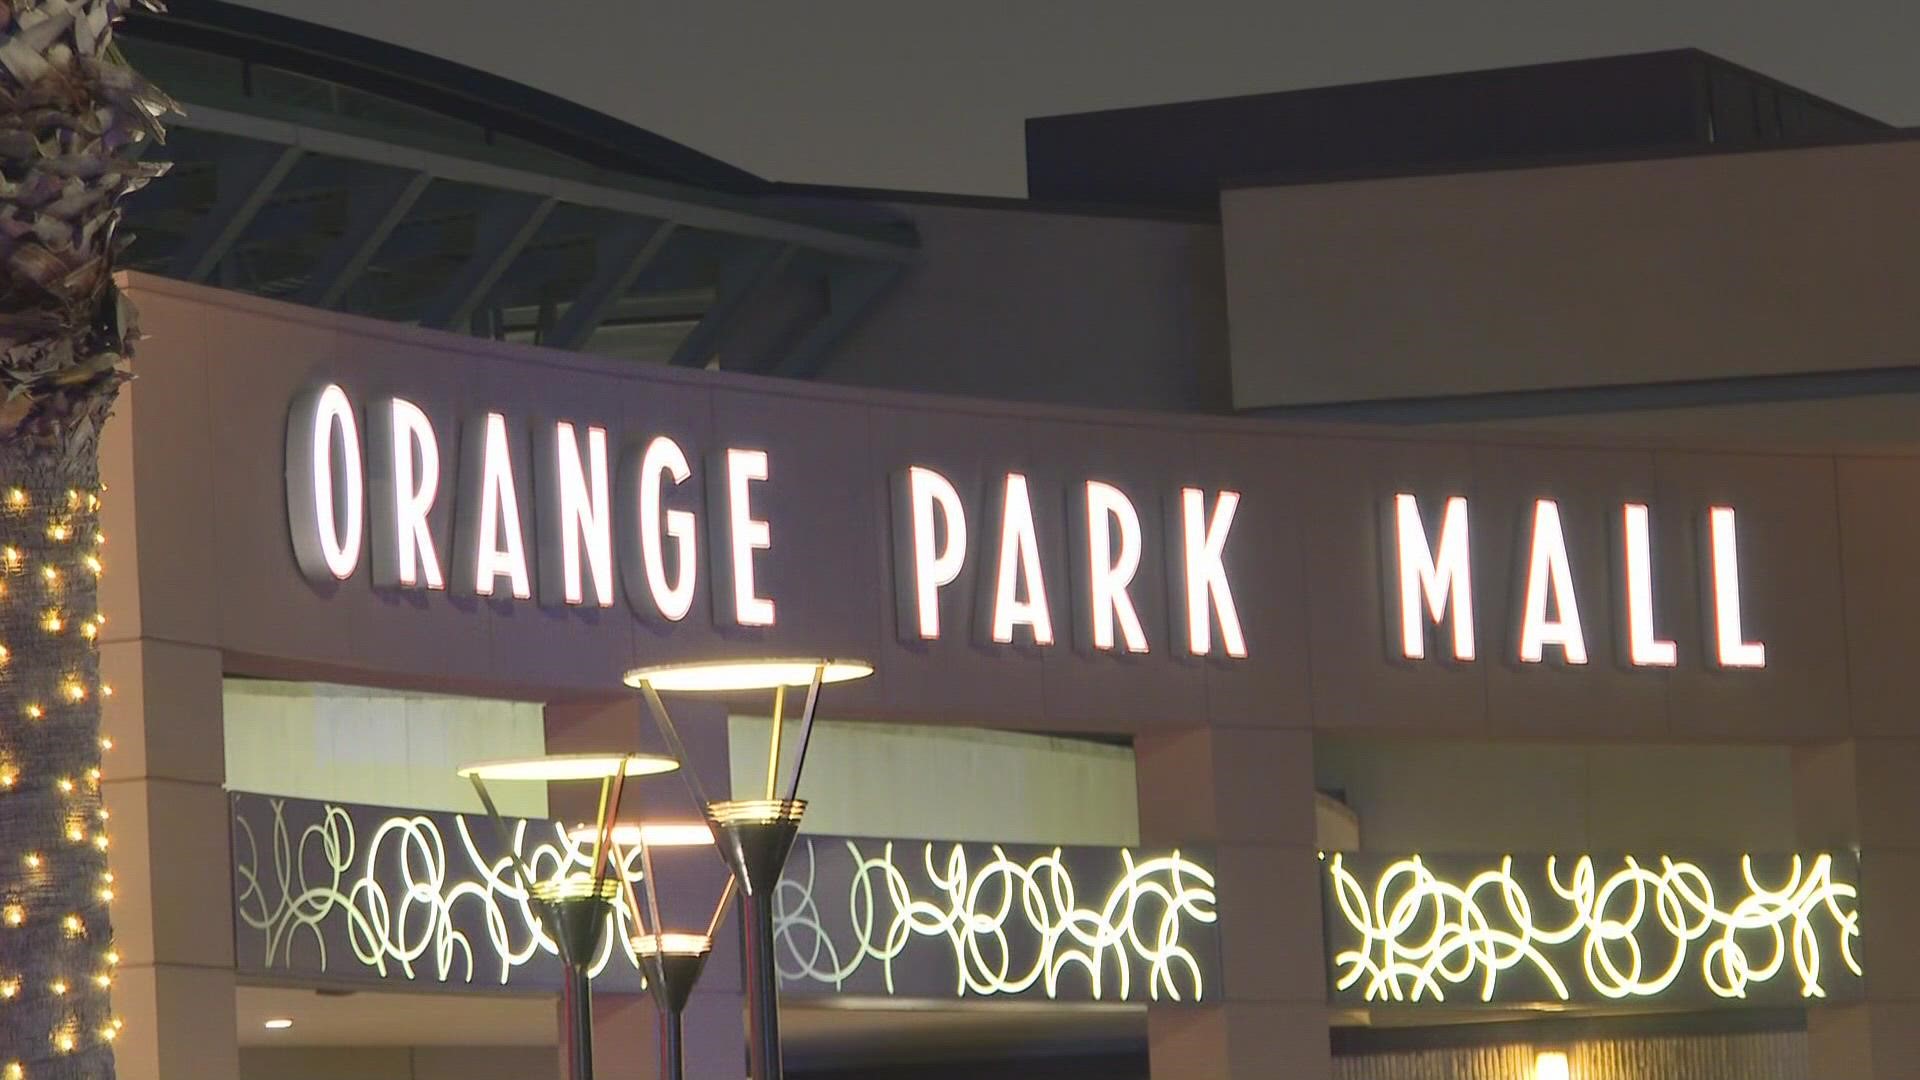 Deputies believe that a verbal dispute between three men occurred inside of the mall.